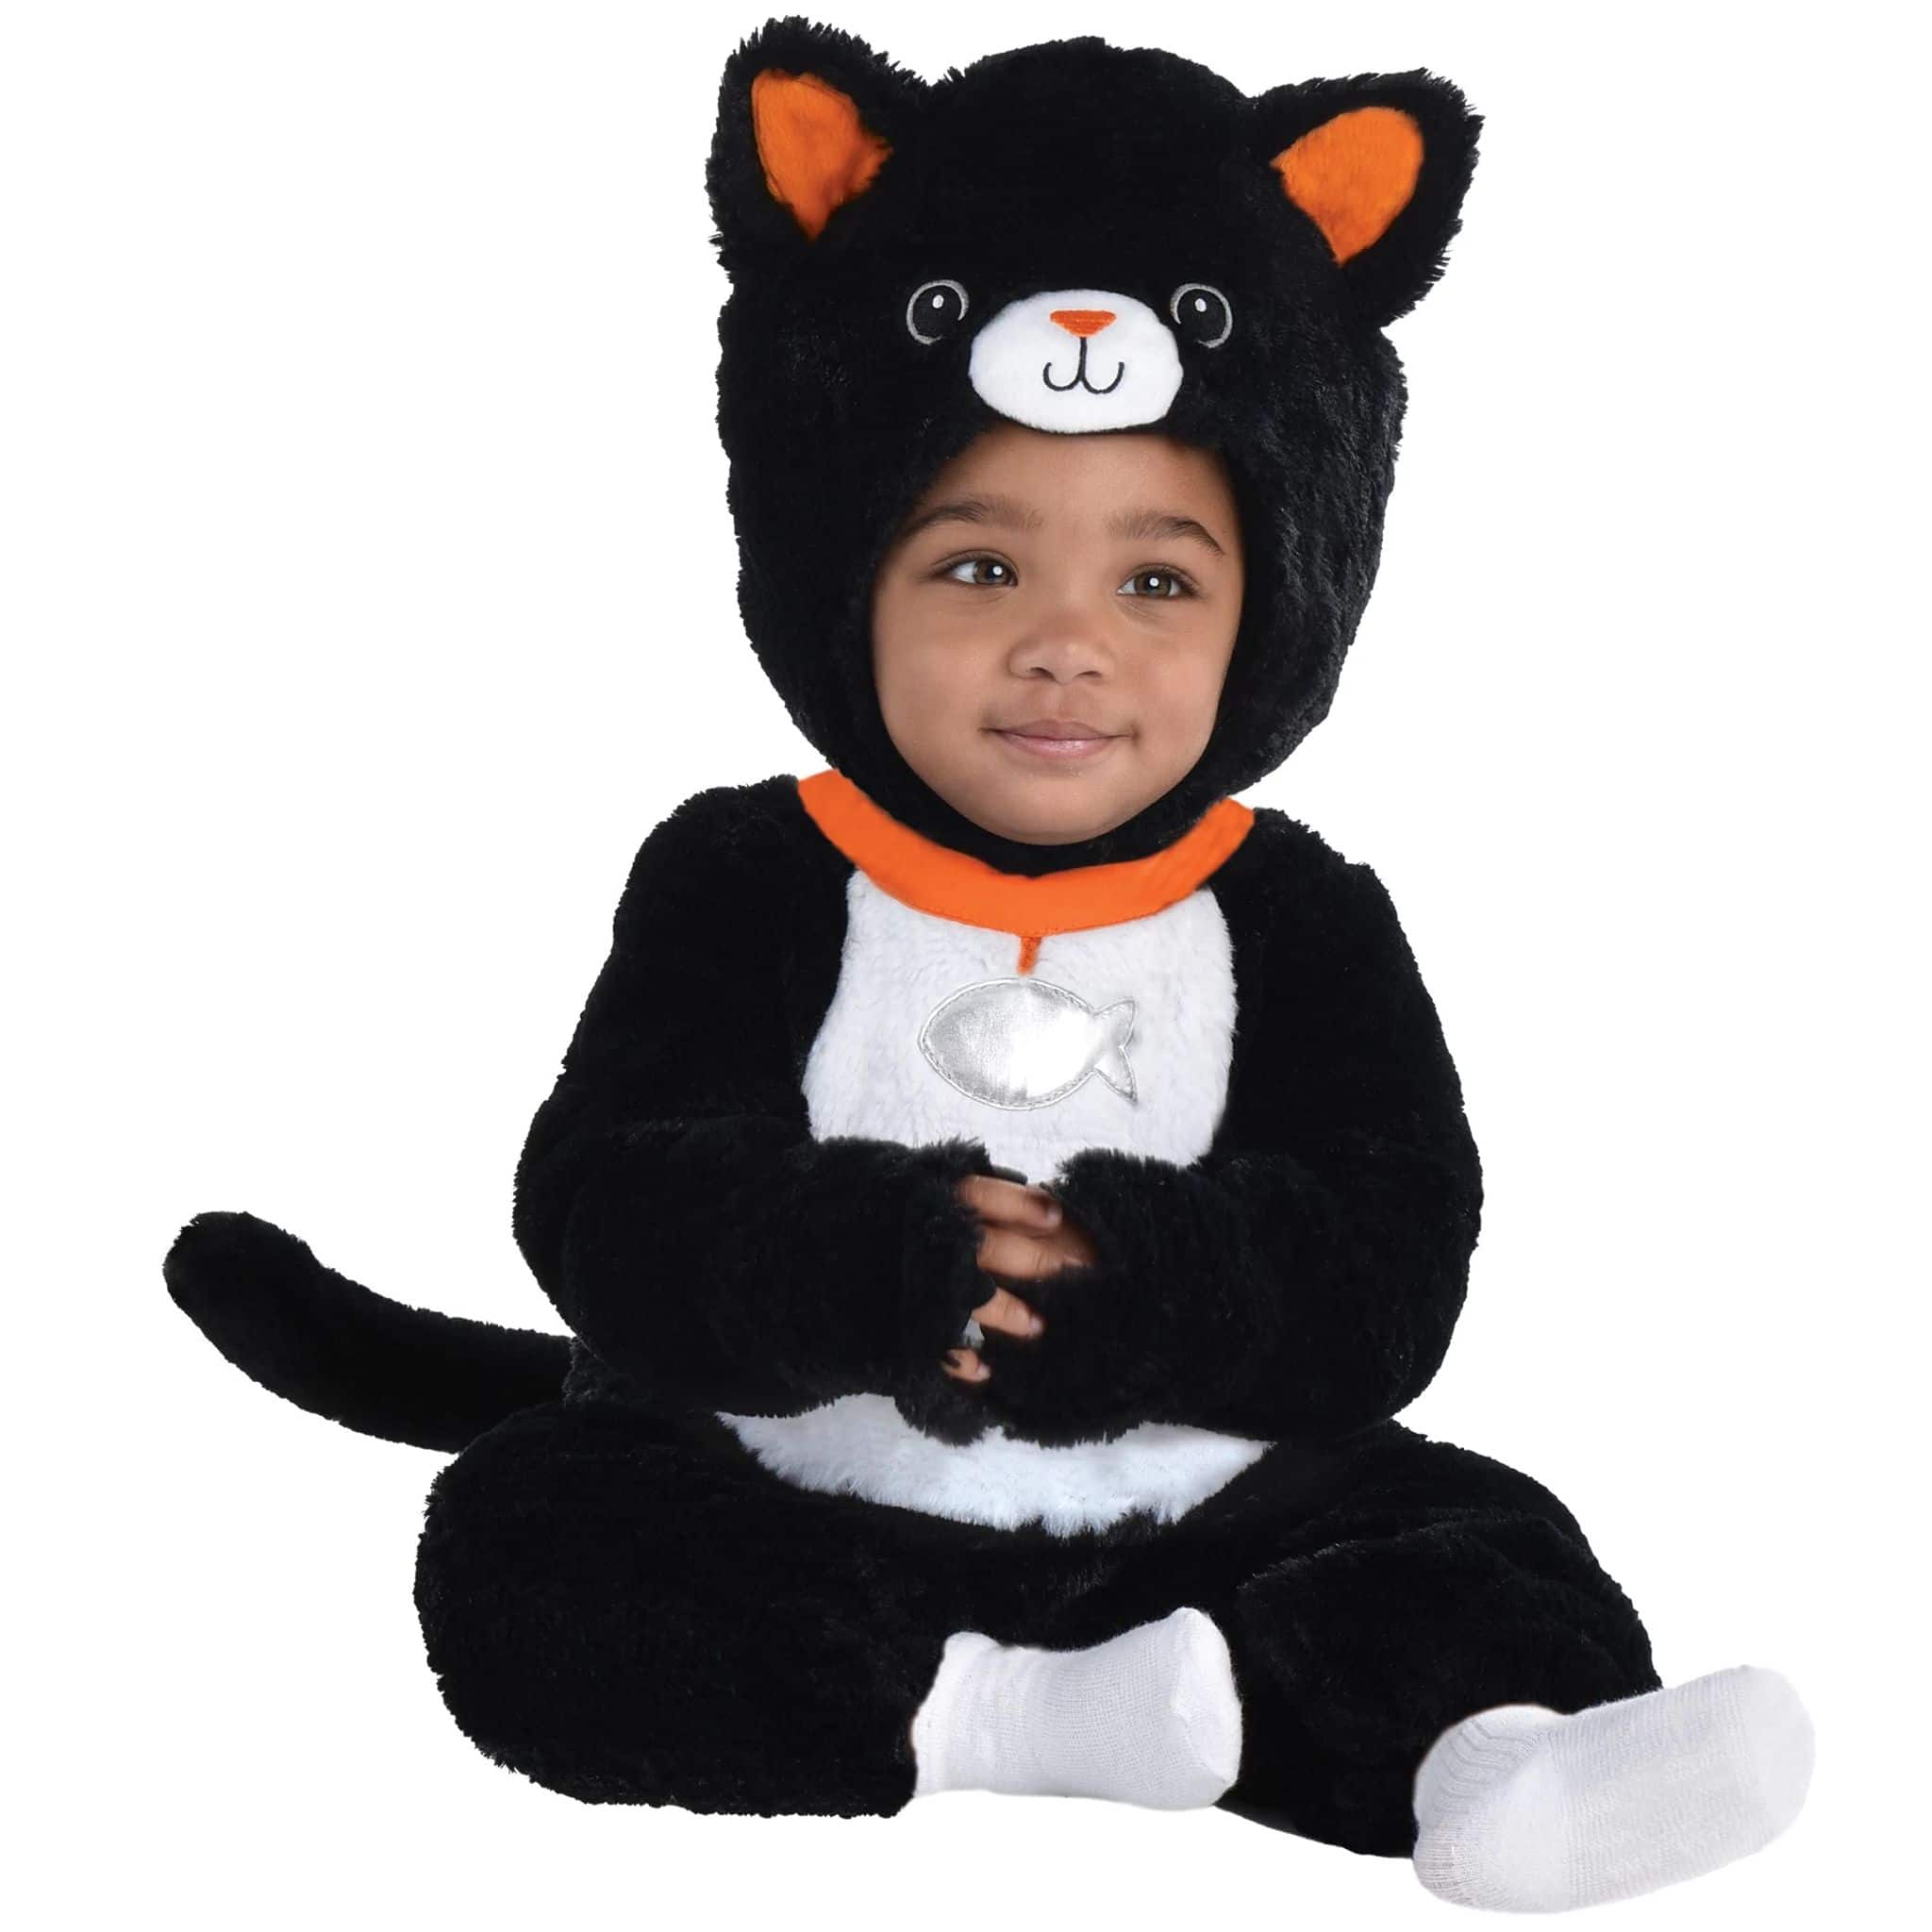 Cuddly Black Cat Infant Costume